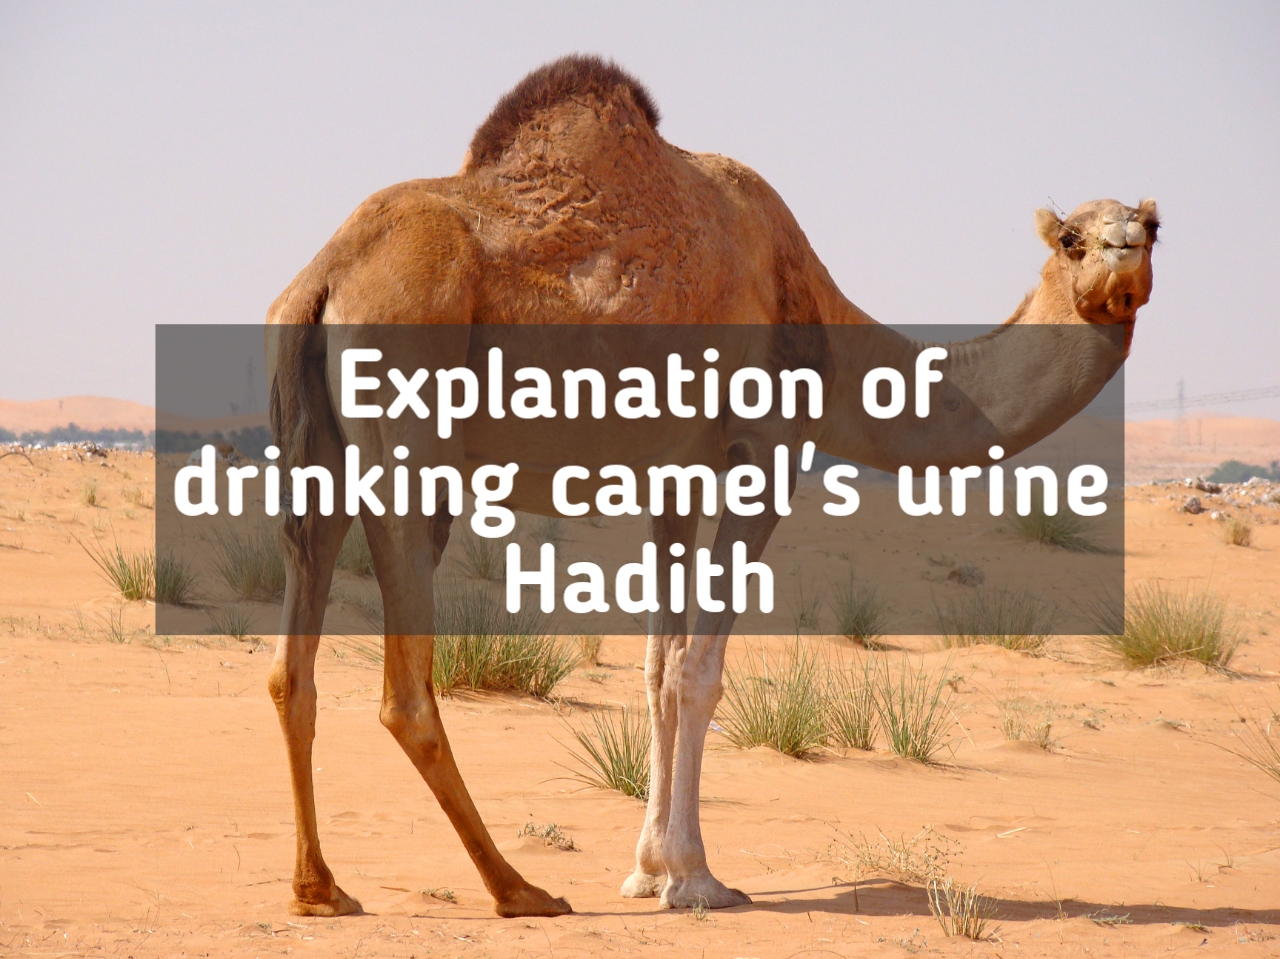 Drinking camel urine,